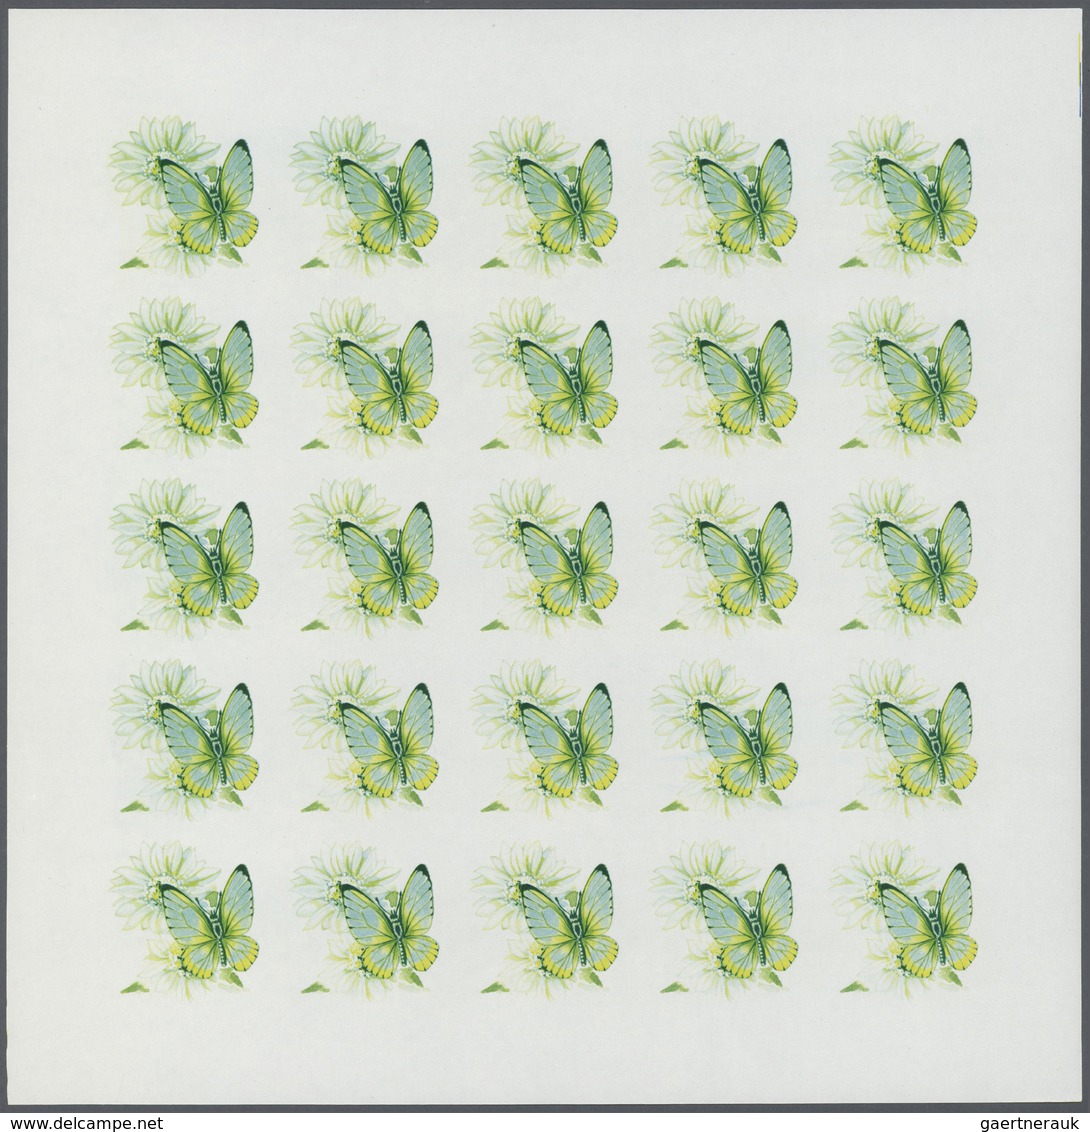 Thematik: Tiere-Schmetterlinge / animals-butterflies: 1967 (May 11), Fujeira. Progressive proofs set